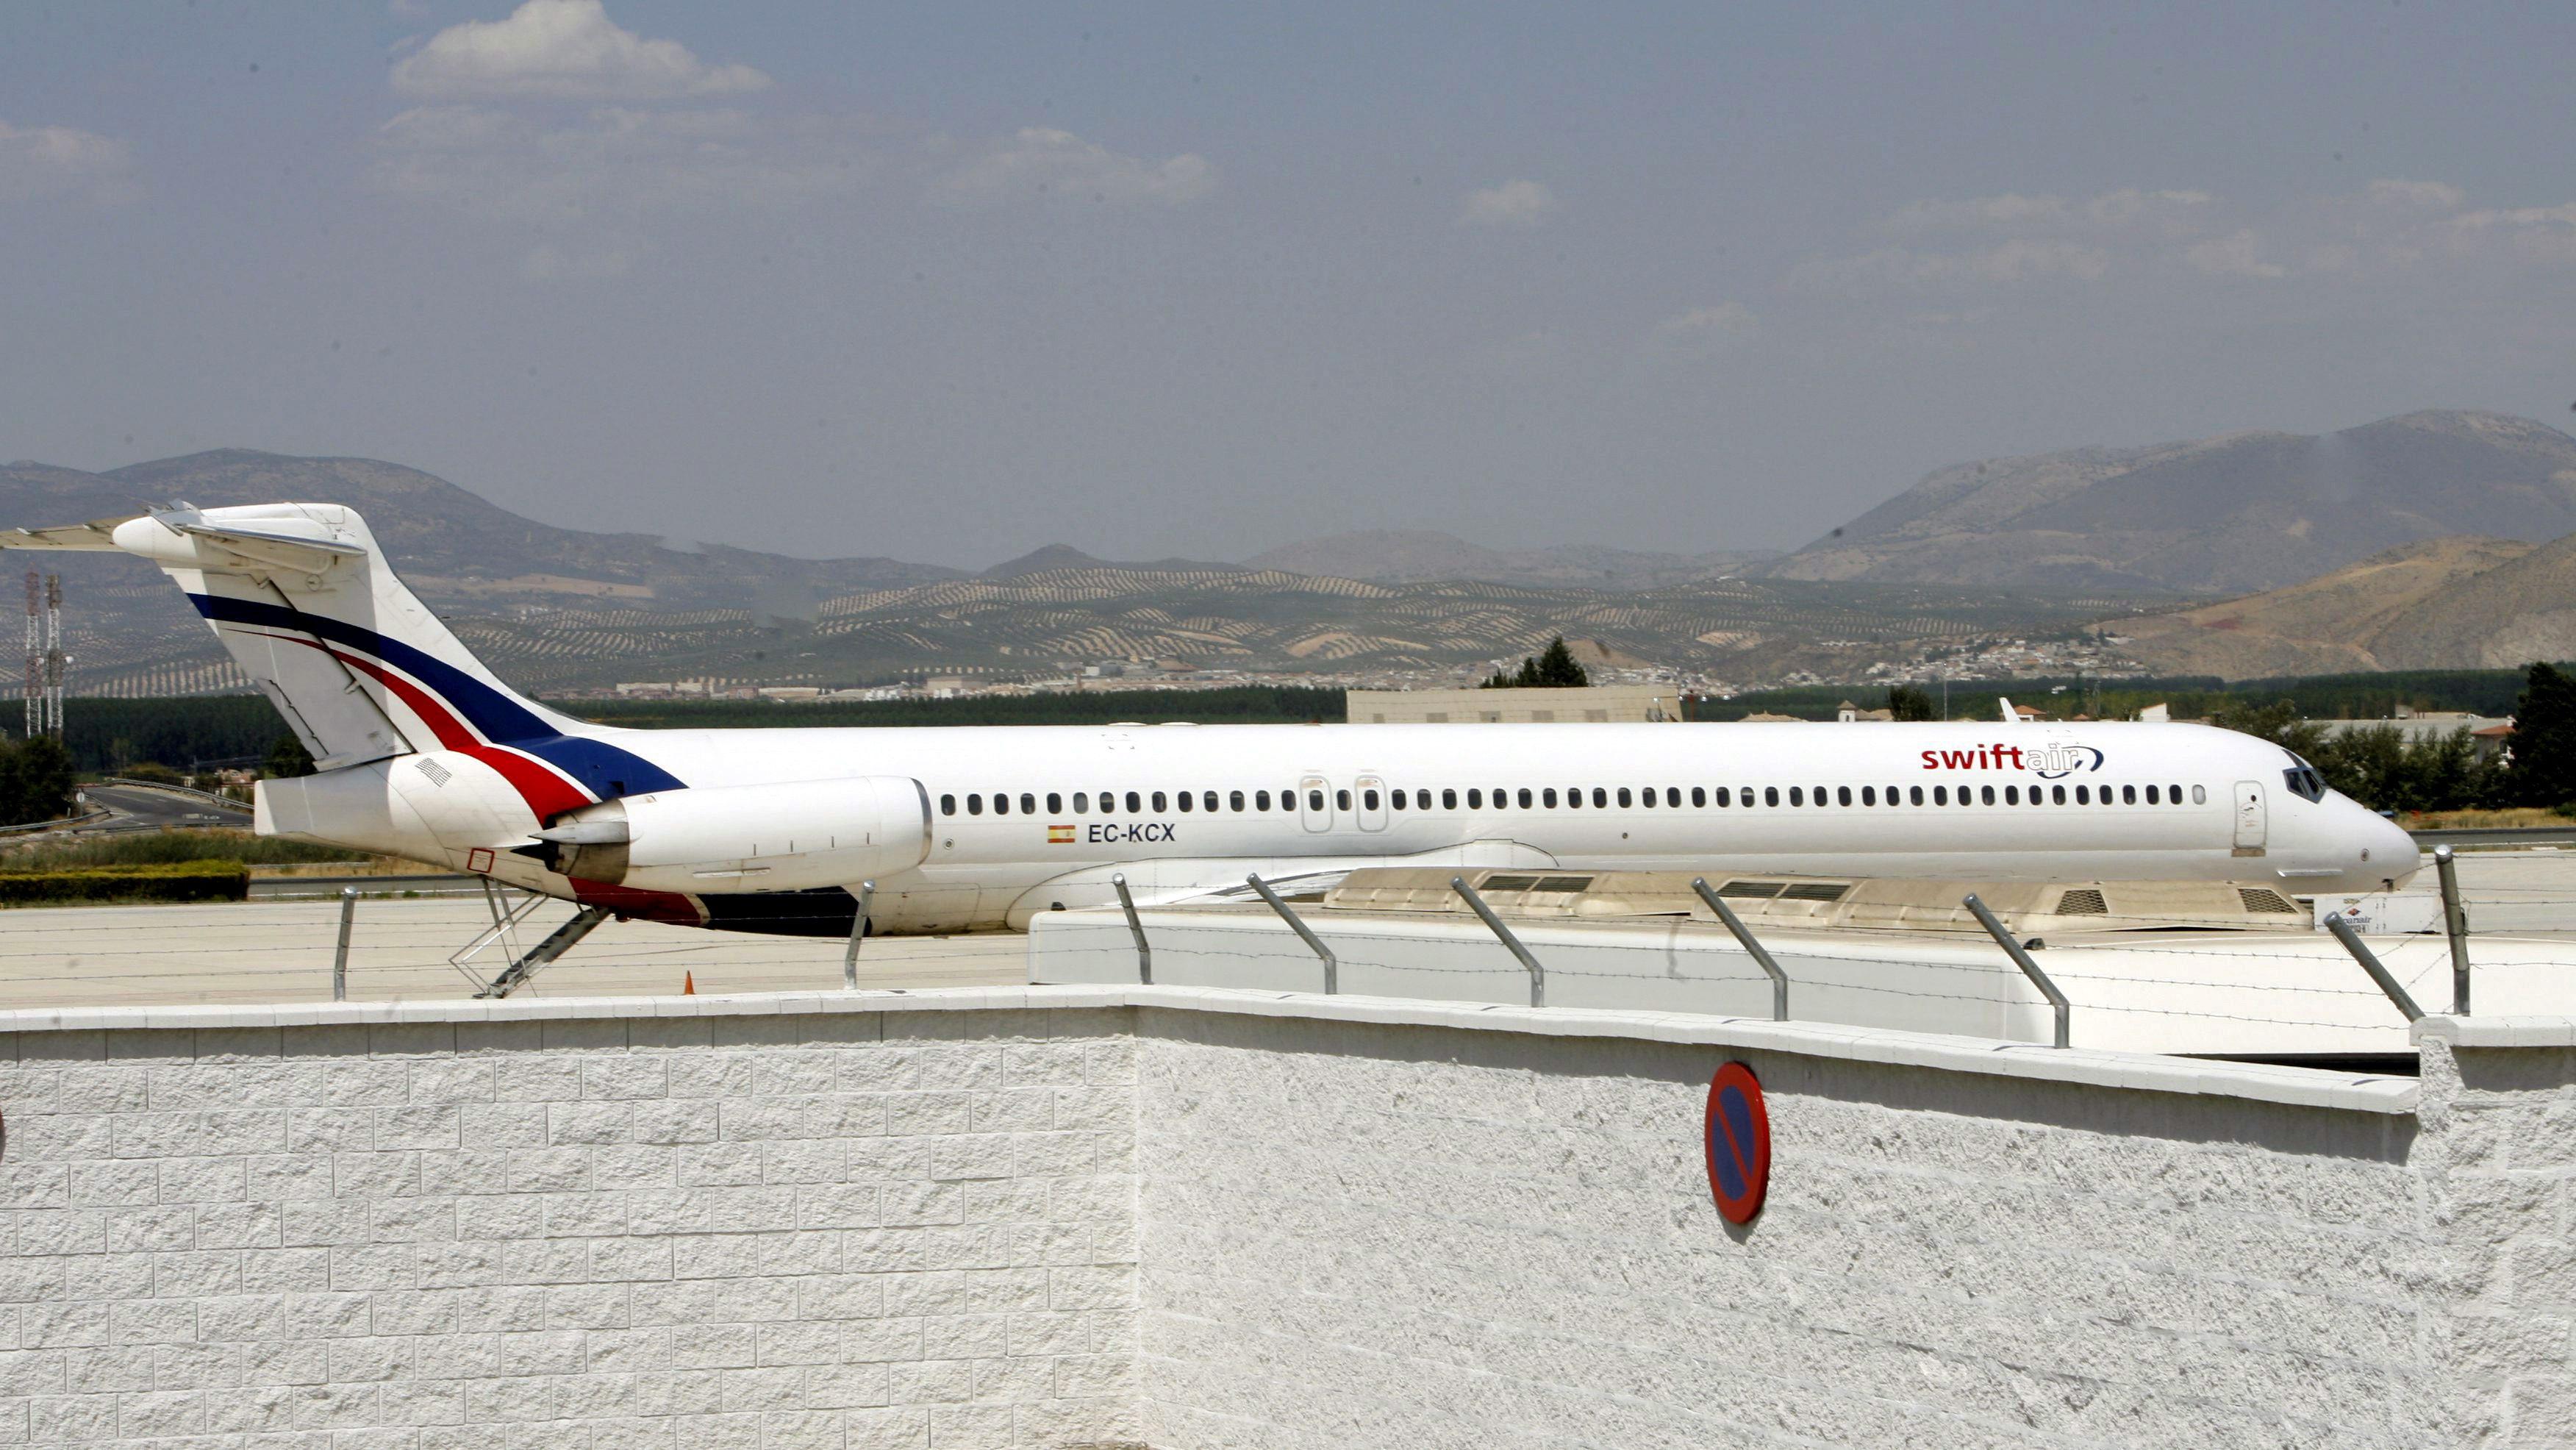 Avión de Air Algerie desaparecido llevaba 119 personas a bordo